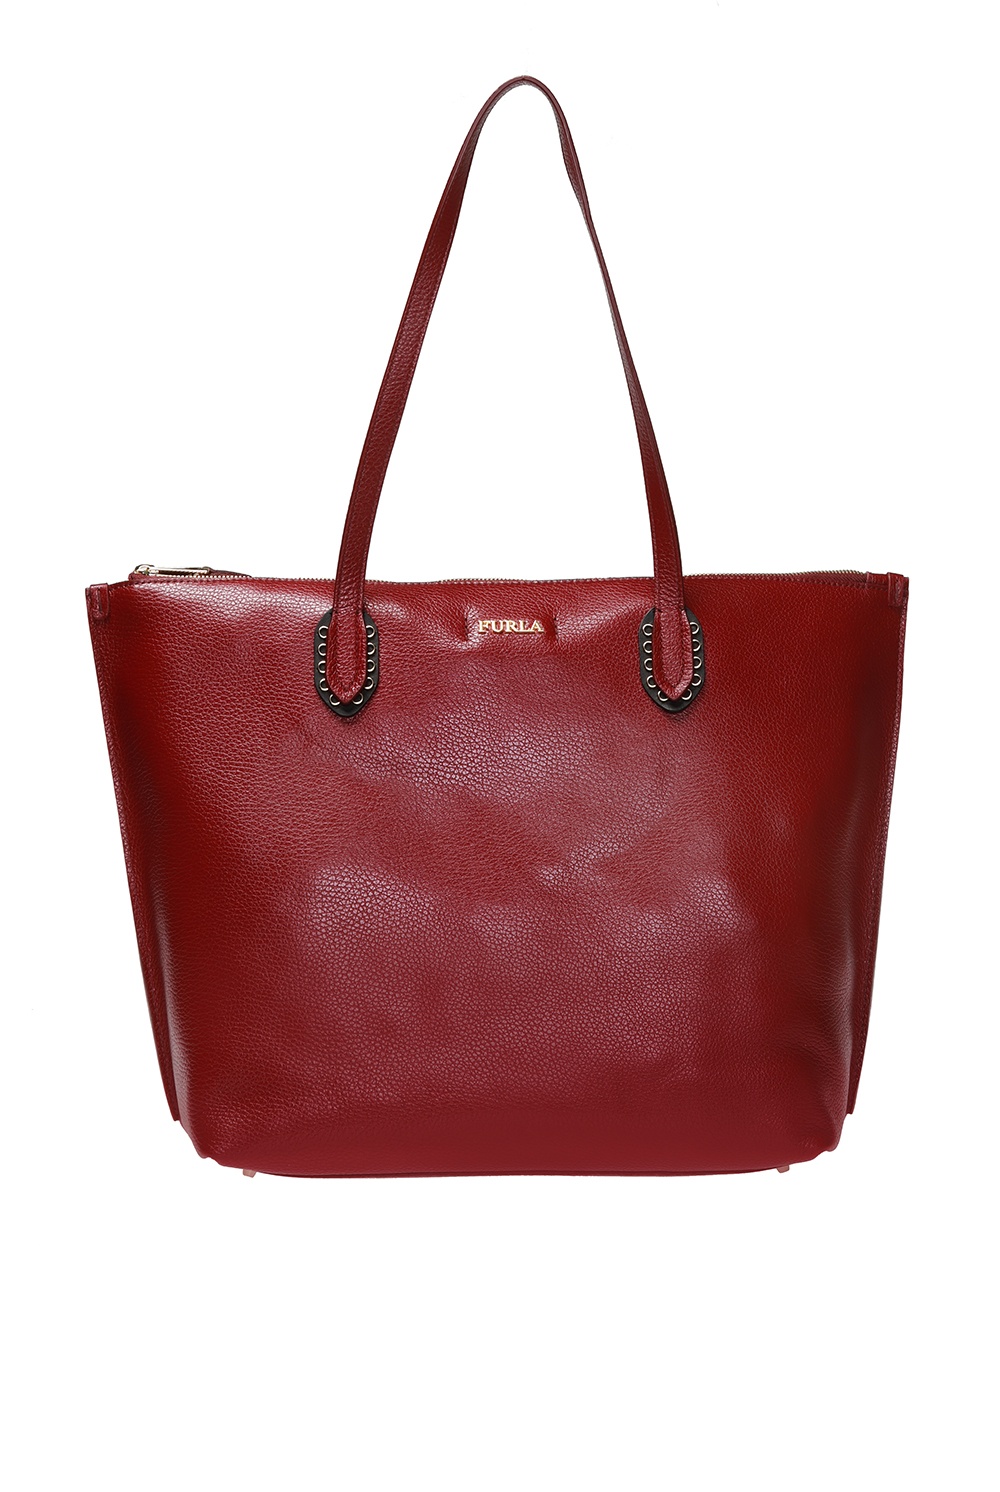 FURLA FURLA LUCE L TOTE, Red Women's Handbag